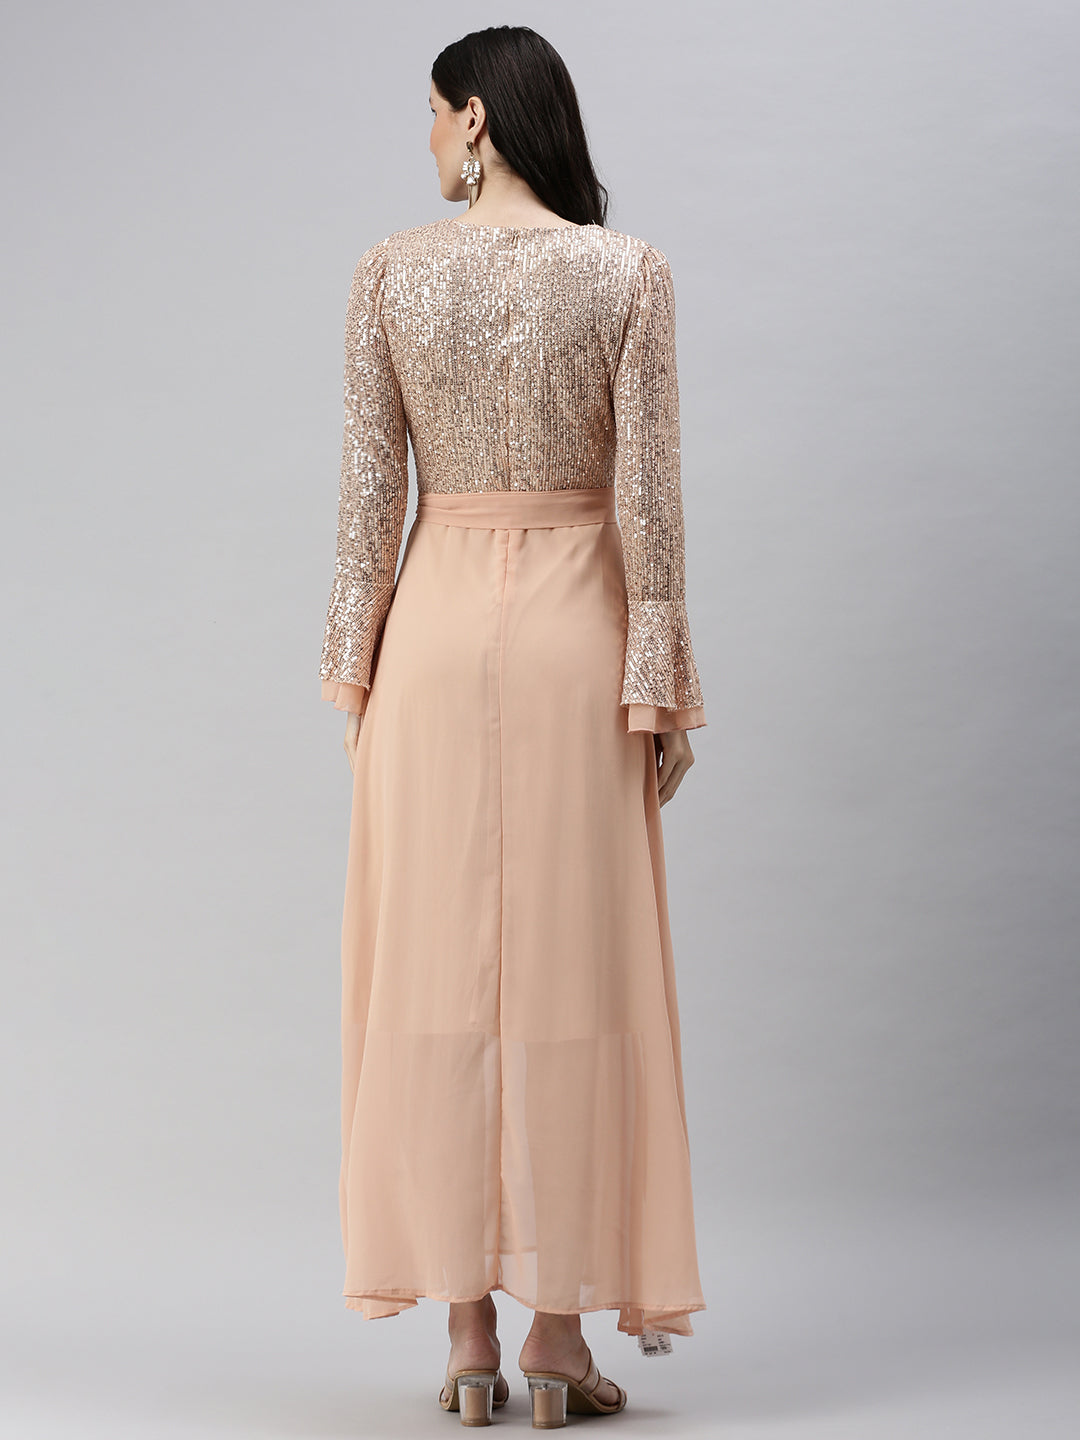 Women's Embellished Peach Dress